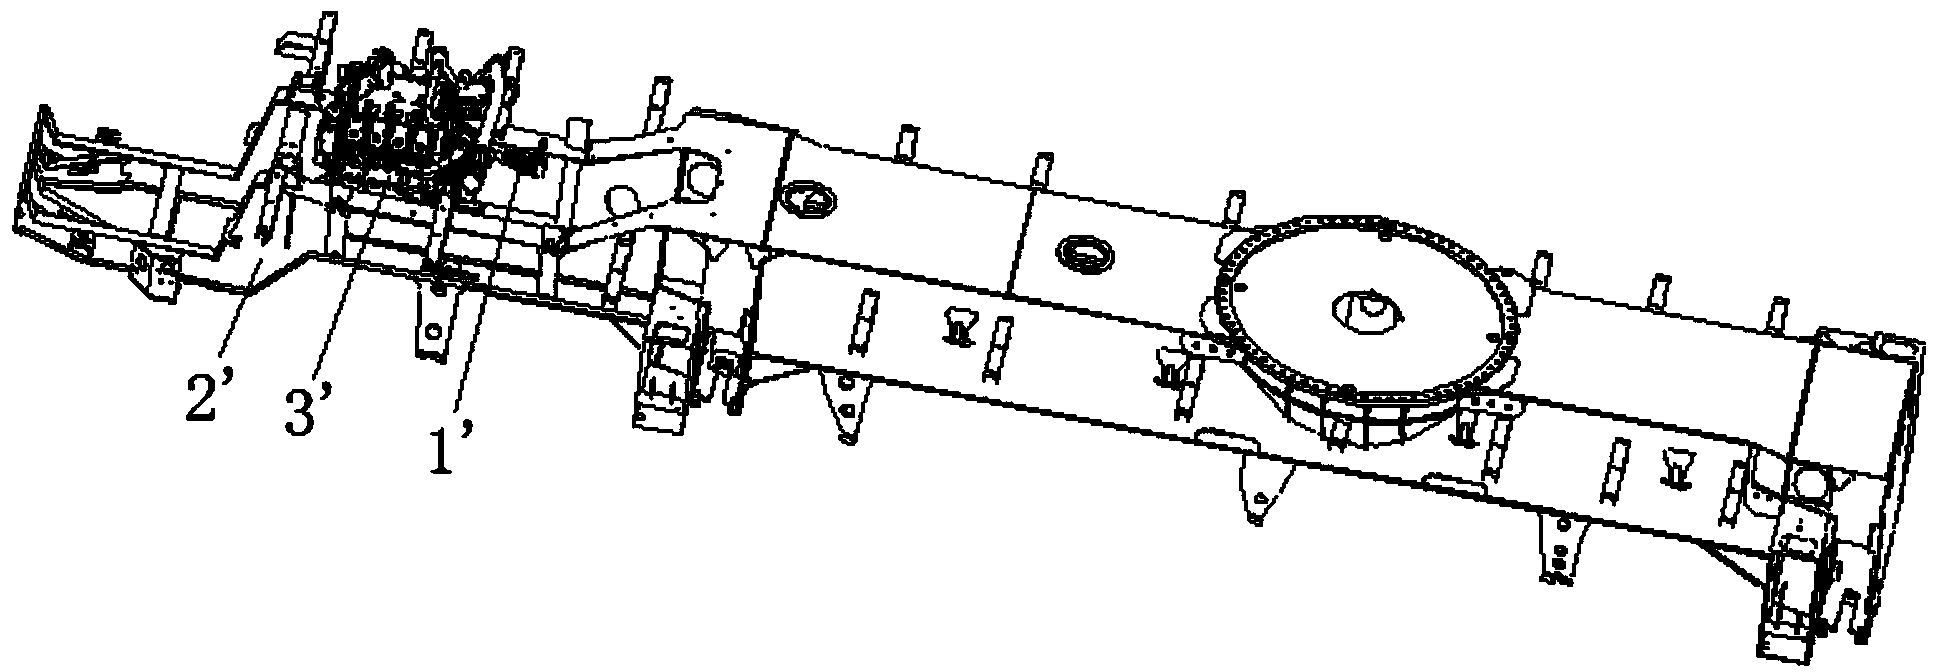 Oil pump device for automobile crane